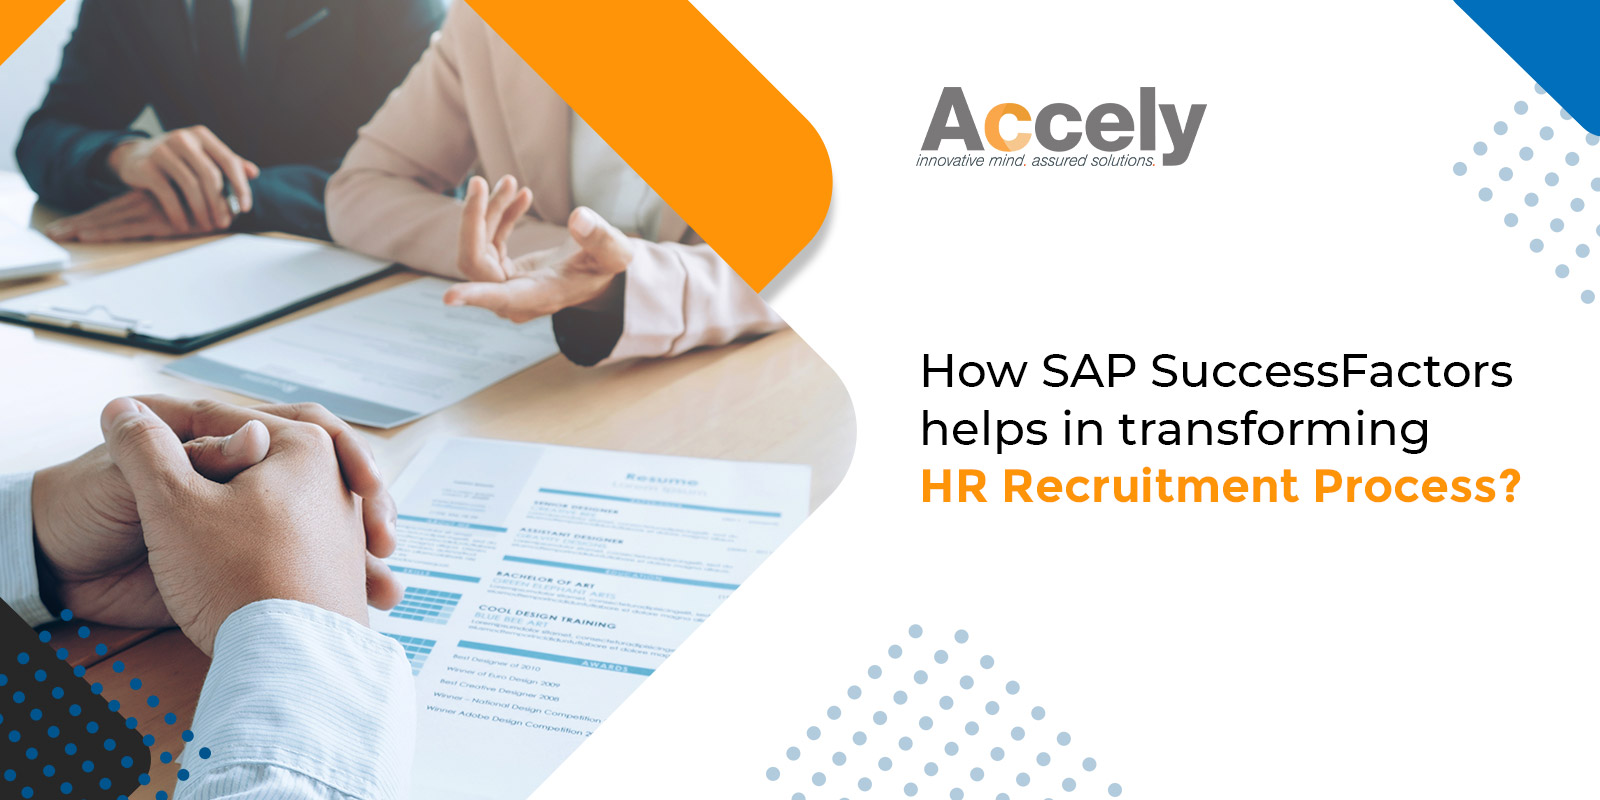 How Transform HR Recruitment Process